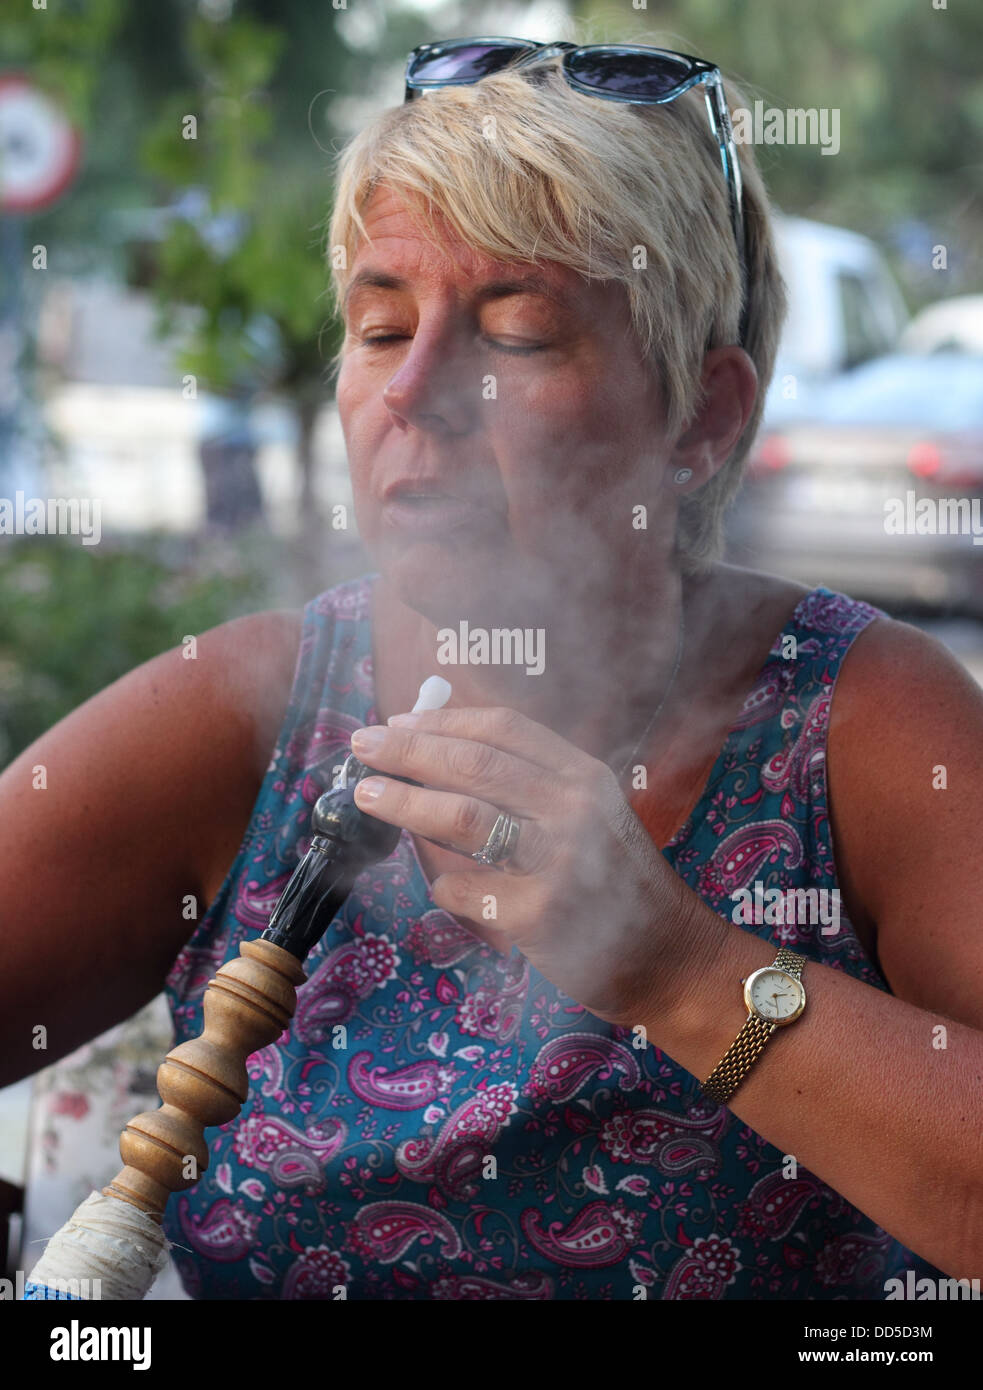 smoking a hookah water pipe Stock Photo